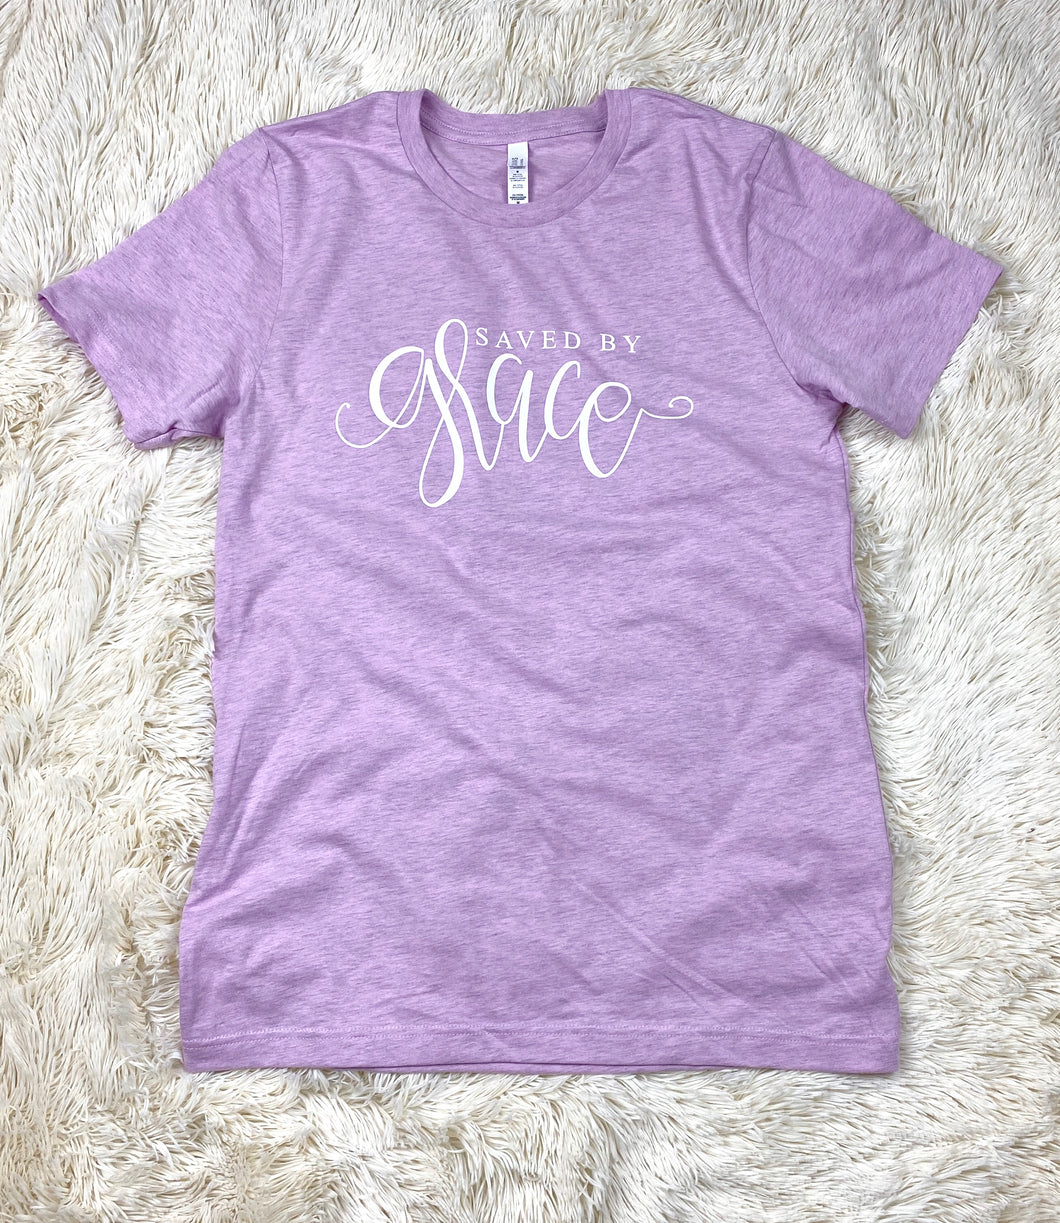 Saved By Grace Tee Shirt Heathered Purple-S, M, XL, 2XL